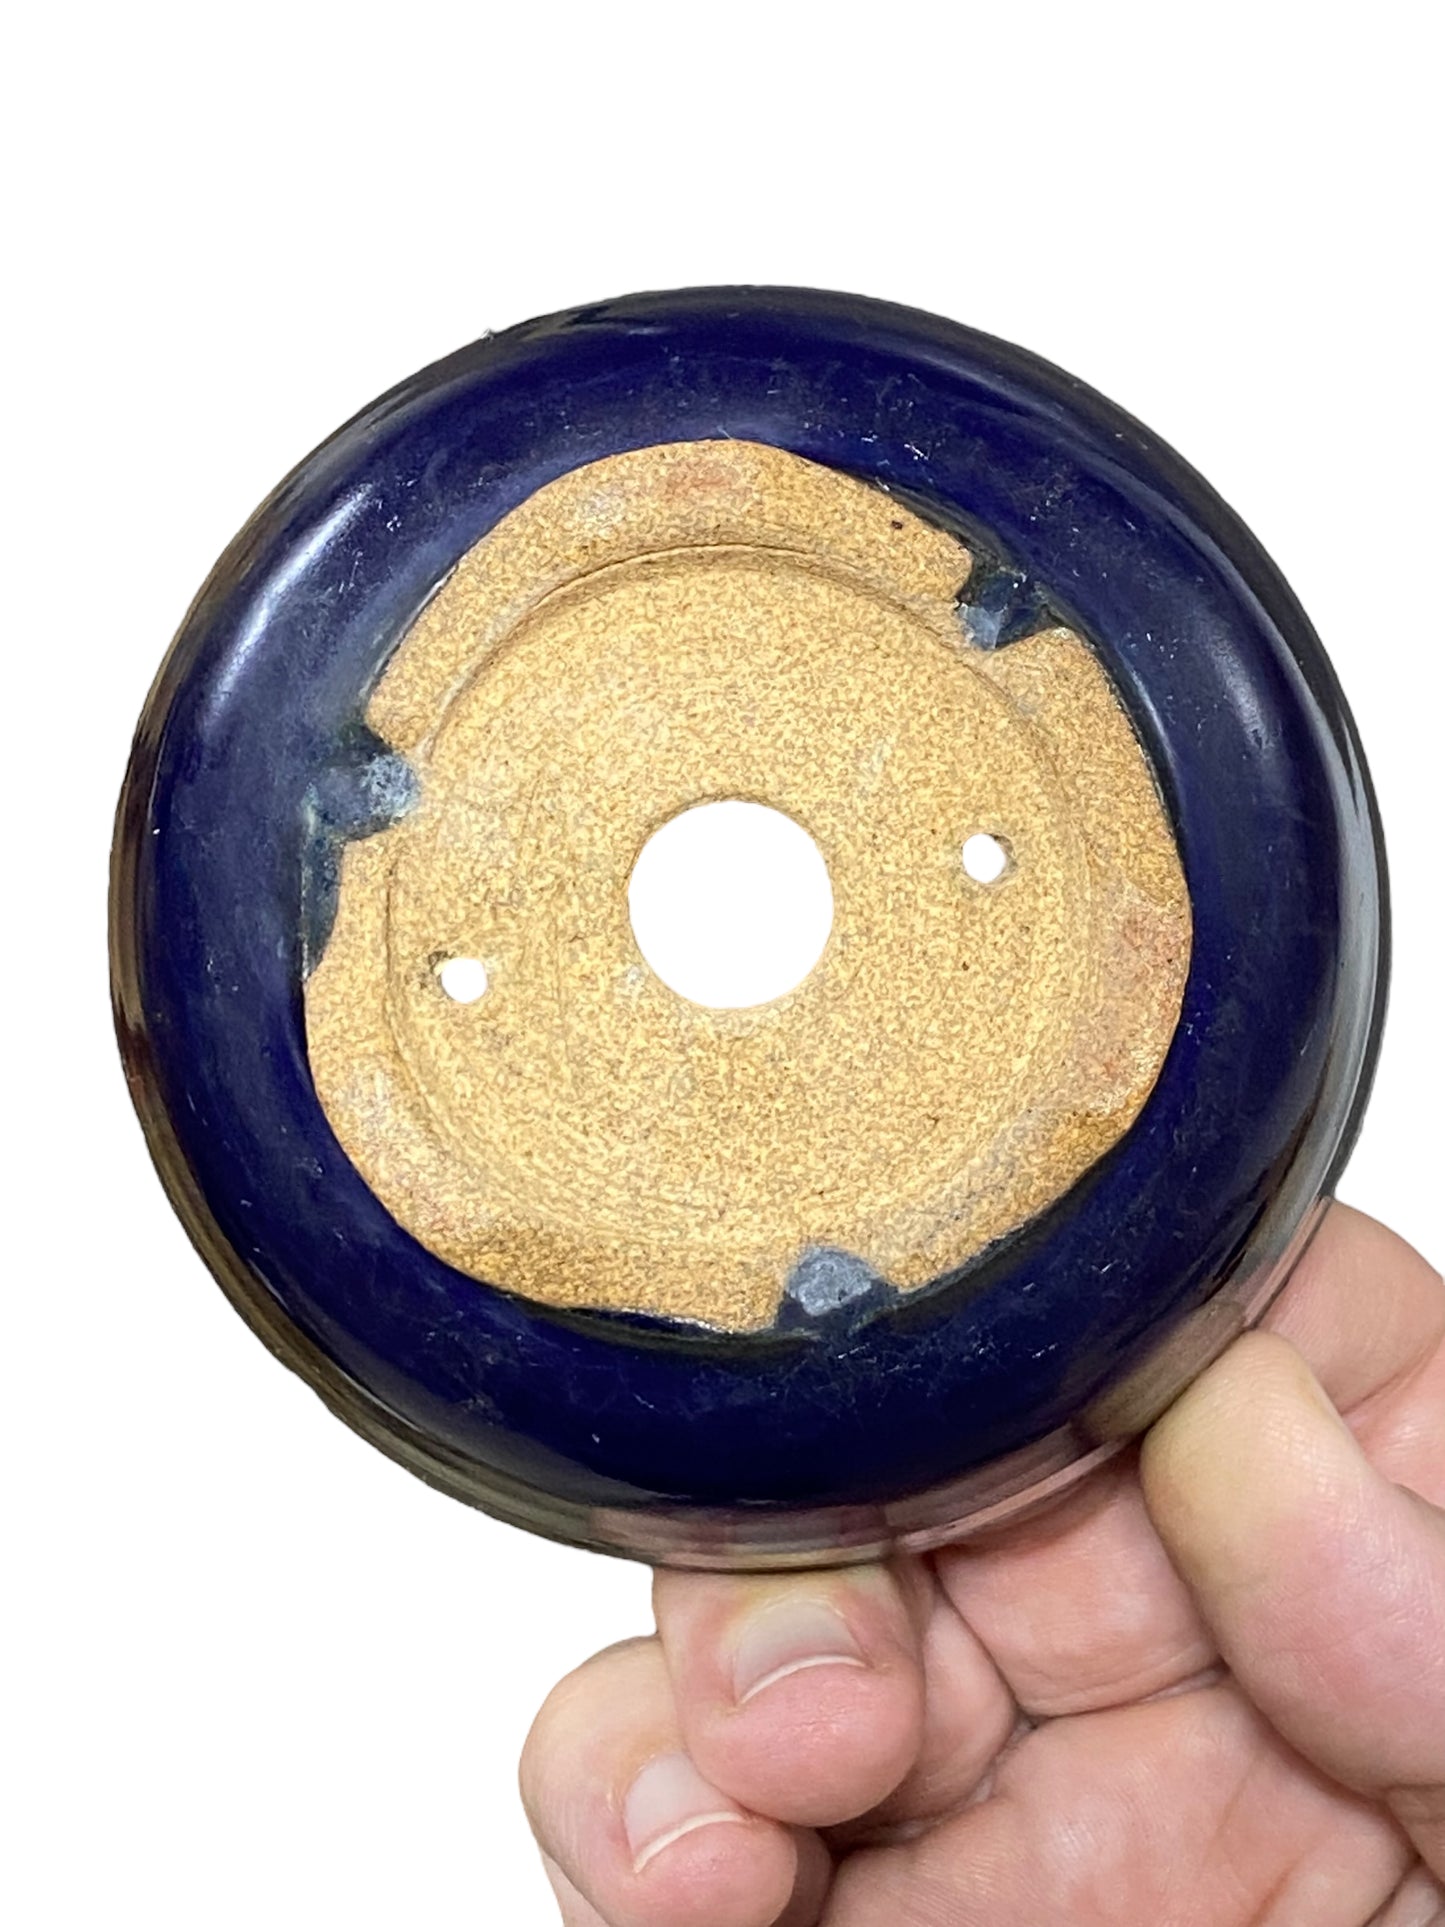 Isso - Ruri Blue Glazed Bowl Bonsai or Accent Pot